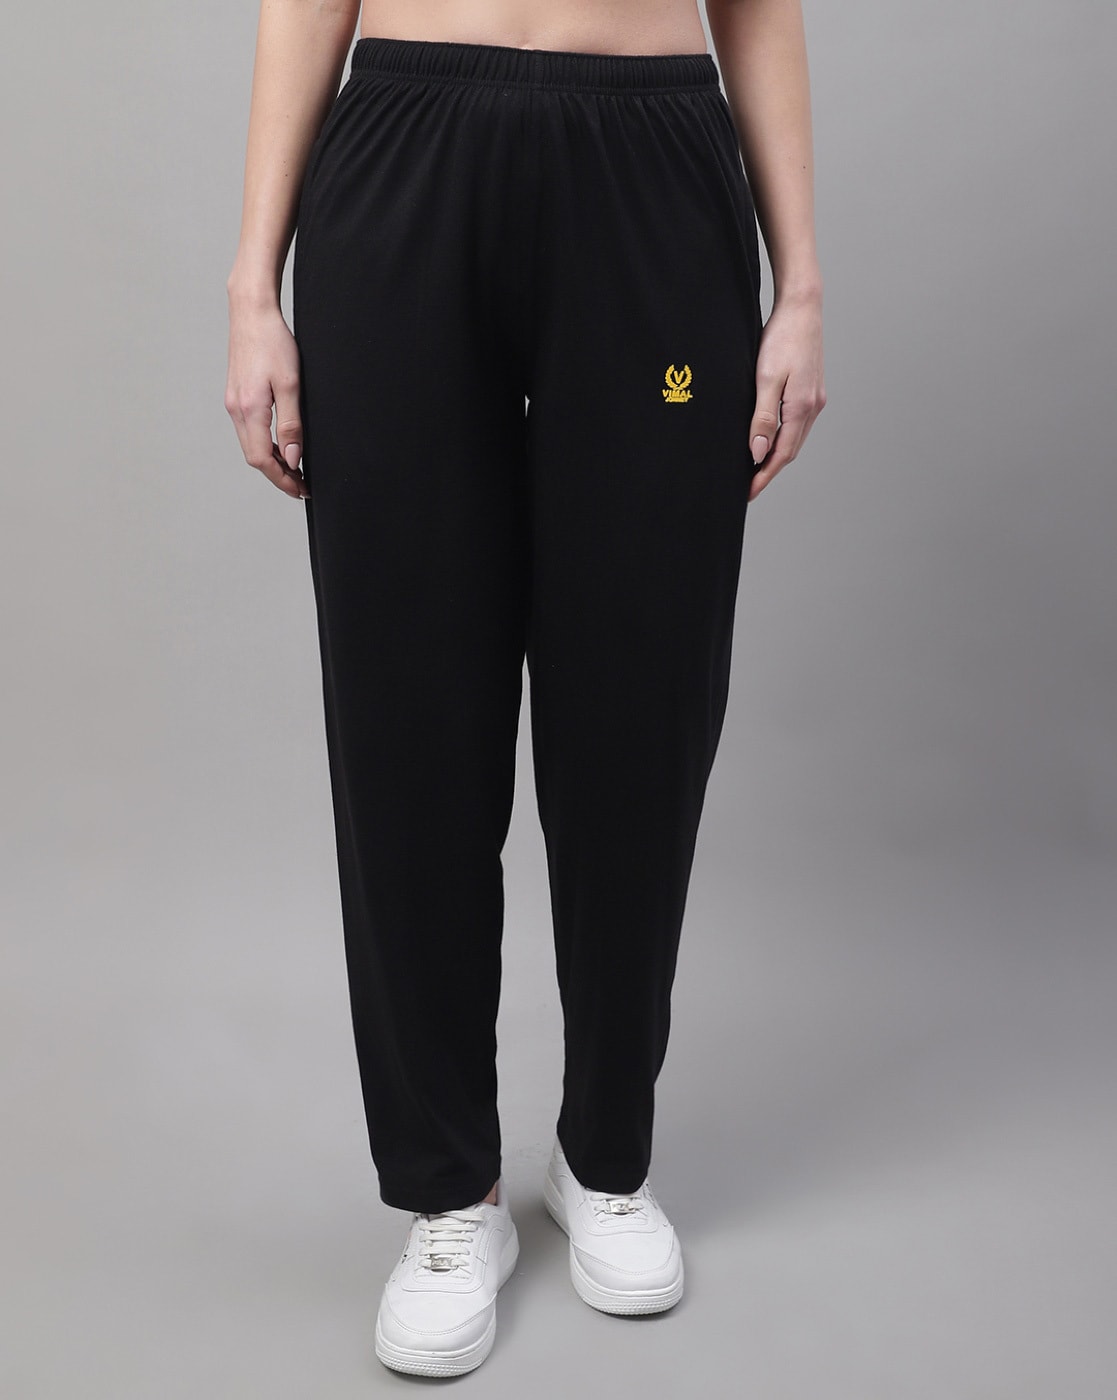 VIMAL JONNEY Men Regular Fit Trackpants Black Small Pack of 1D7BLACKS01   Amazonin Clothing  Accessories